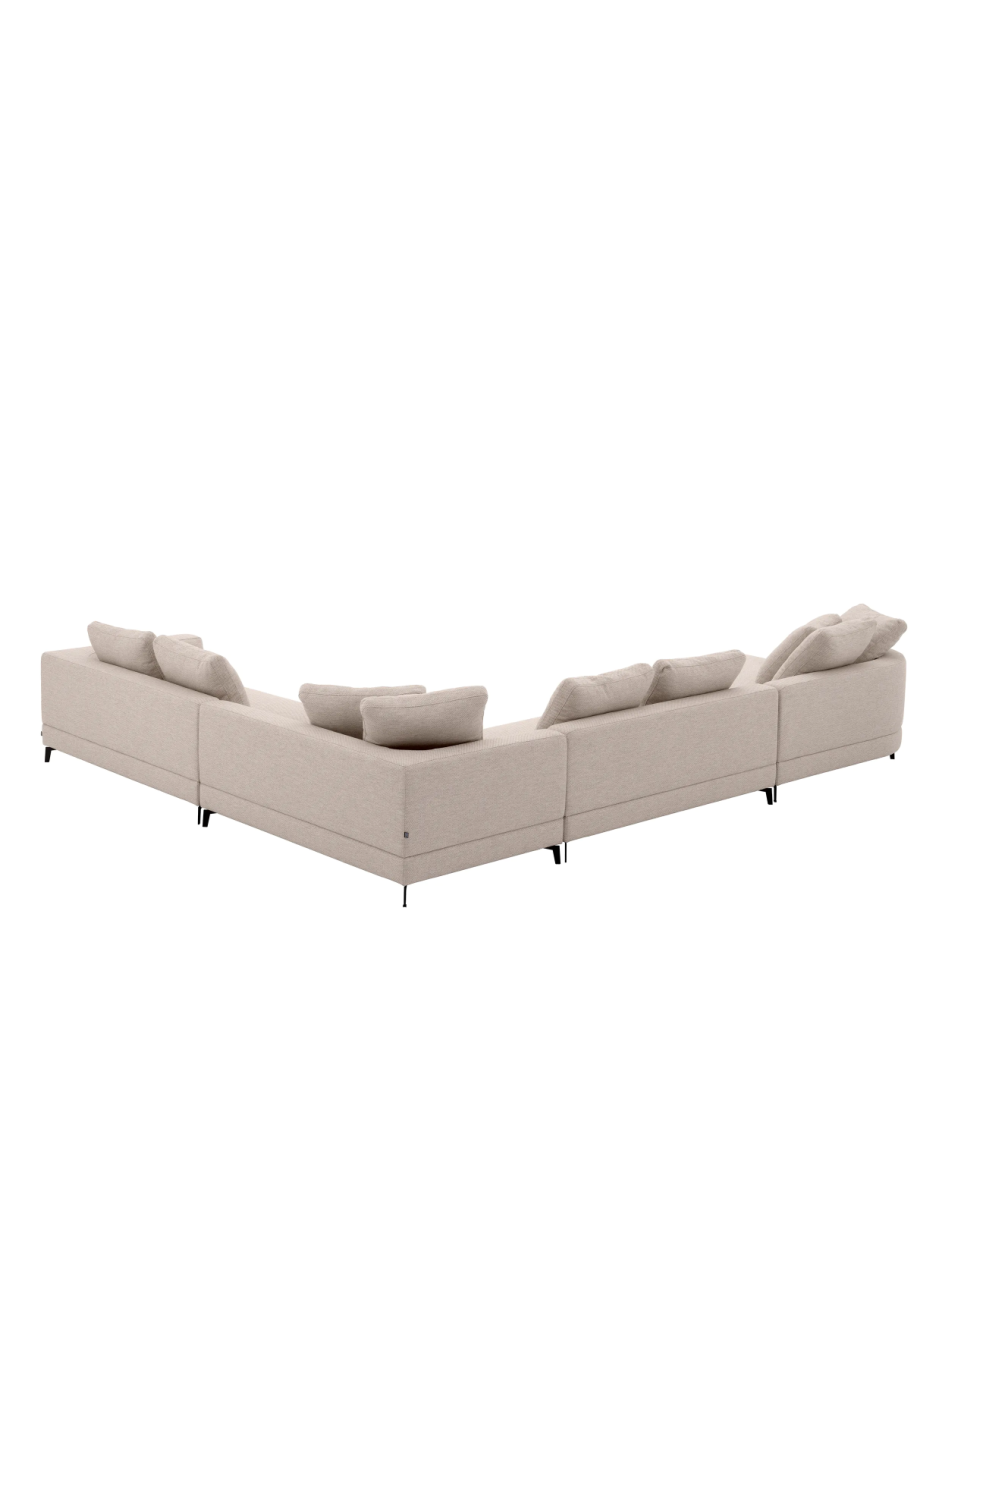 Beige Sectional Modern Sofa L | Eichholtz Moderno | Oroa.com